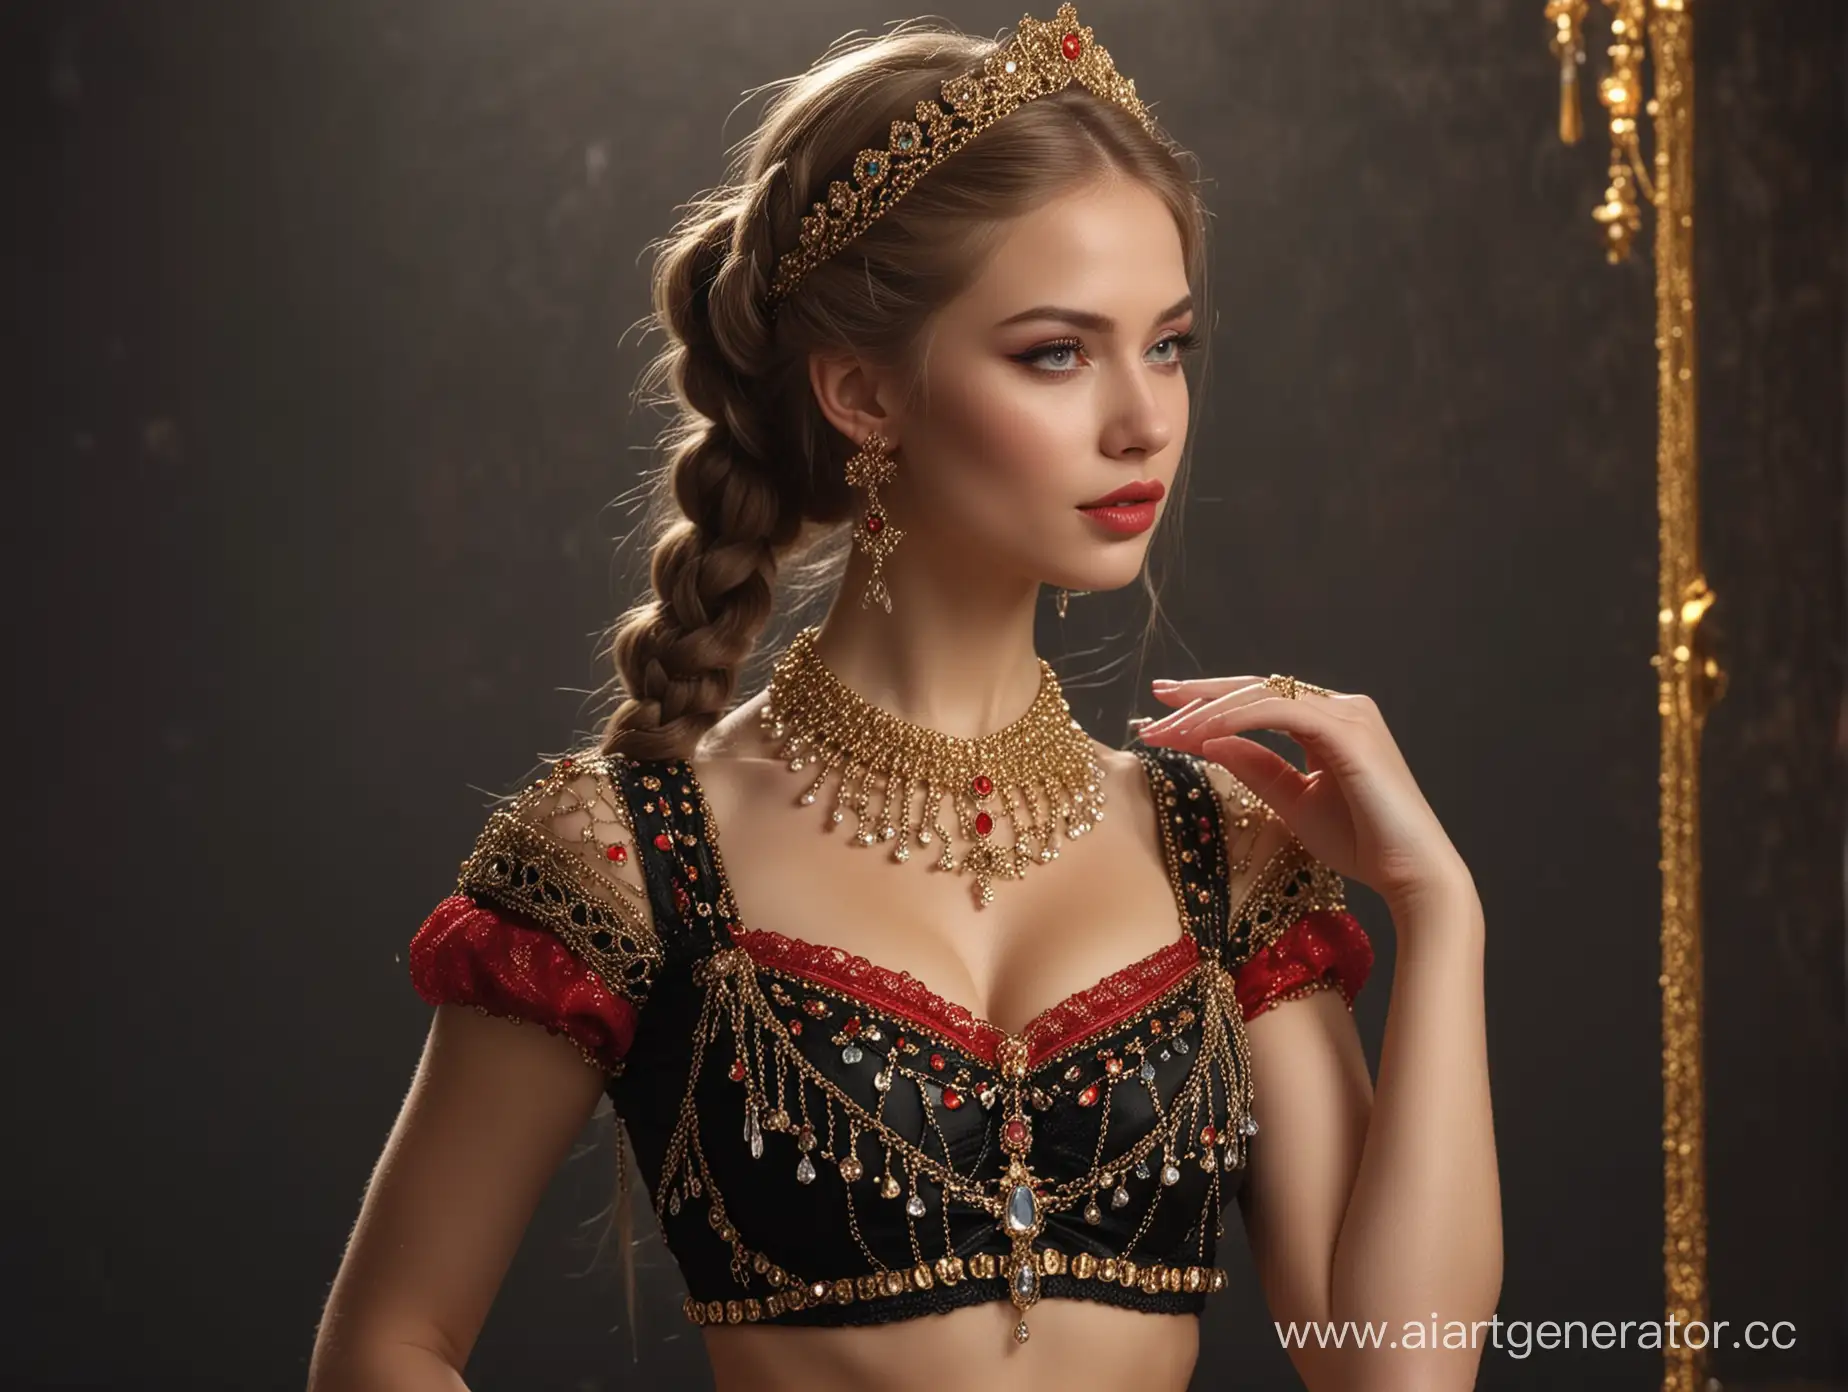 Seductive-Russian-Beauty-in-Opulent-Kokoshnik-and-Jewelry